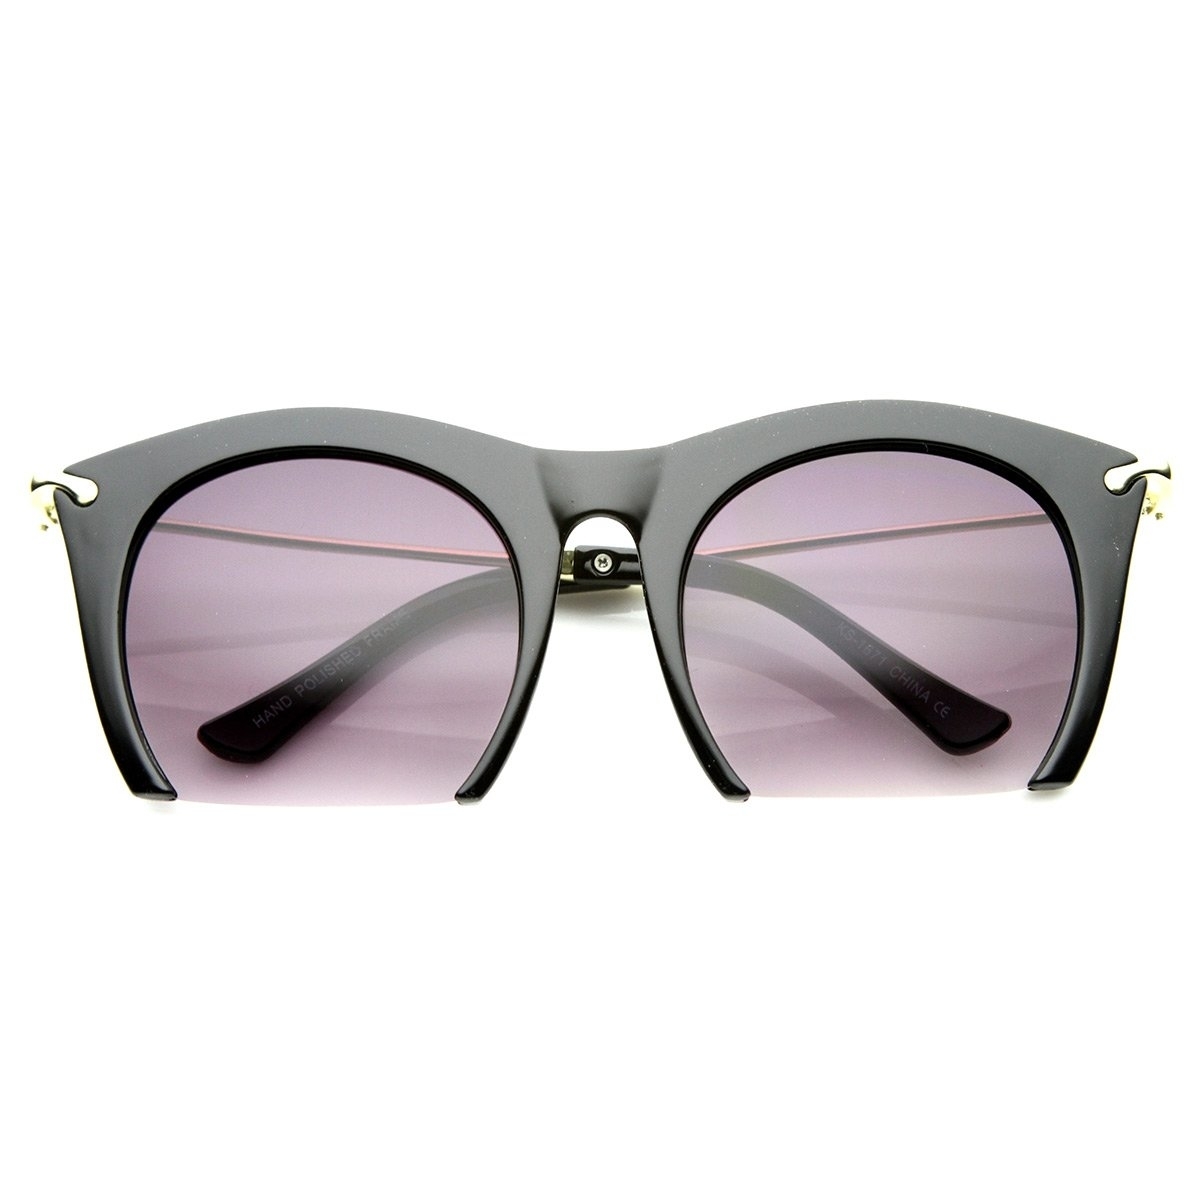 Womens Cateye High Fashion Semi-Rimless Metal Arms Sunglasses - Tortoise Amber